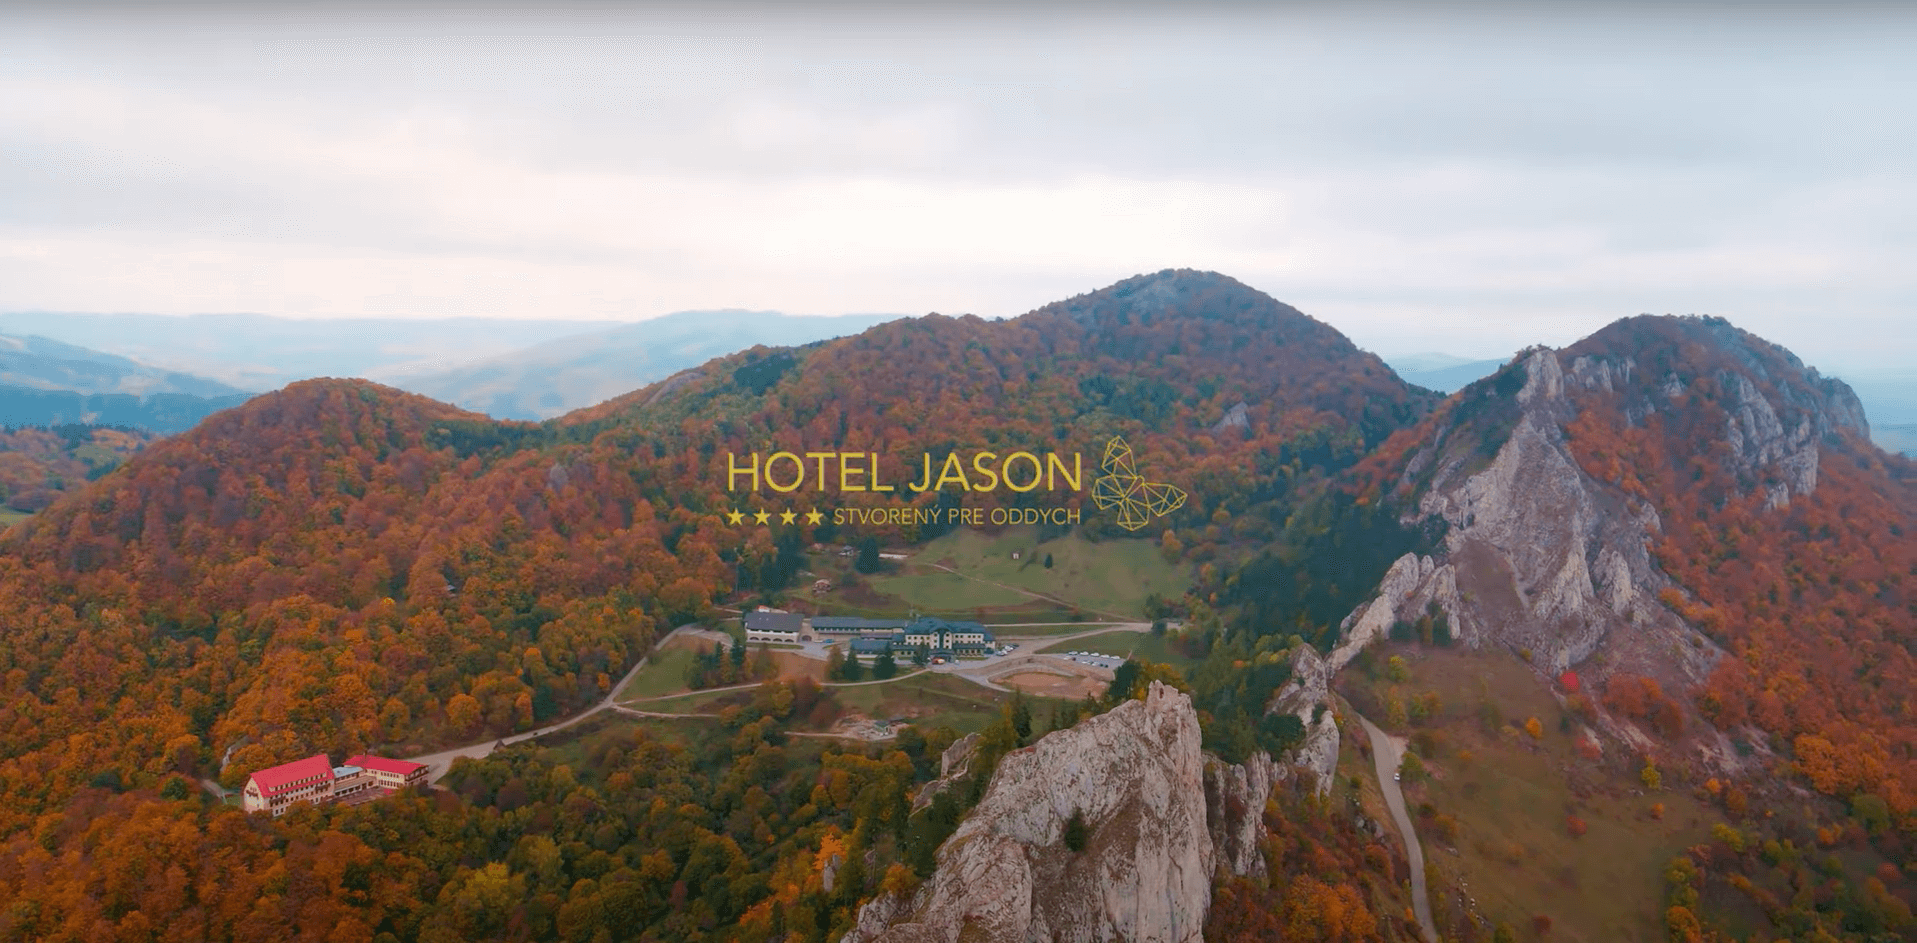 Hotel Jason Video Cover Photo